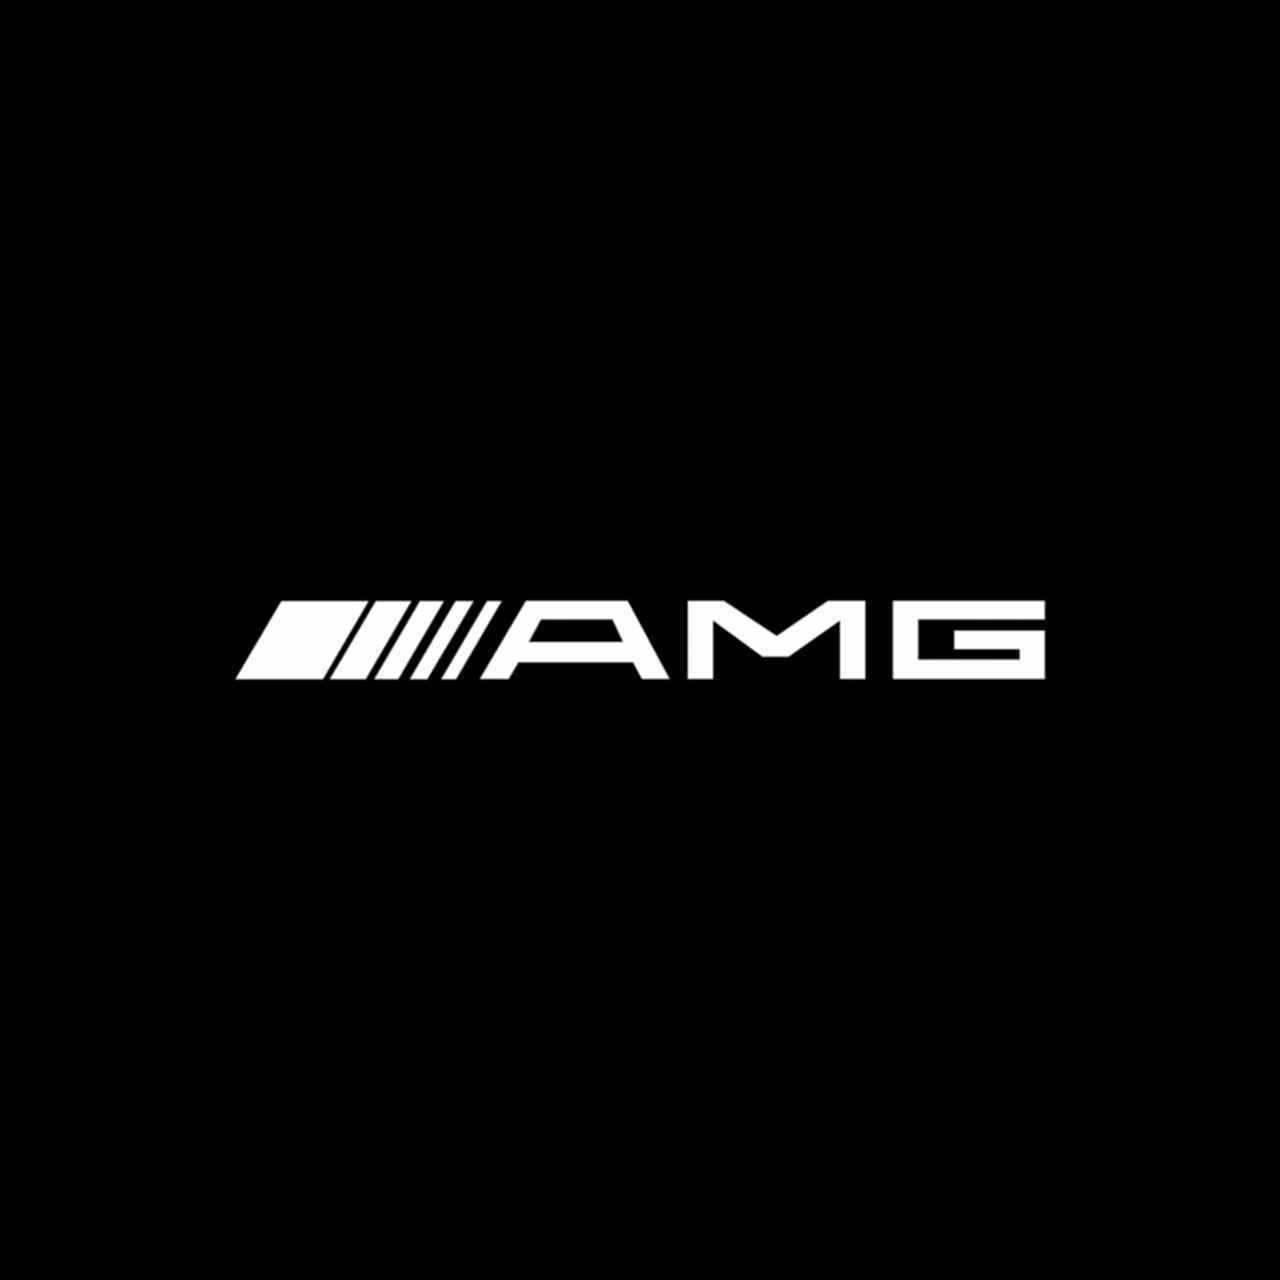 Mercedes Amg Logo Vinyl Decal Sticker